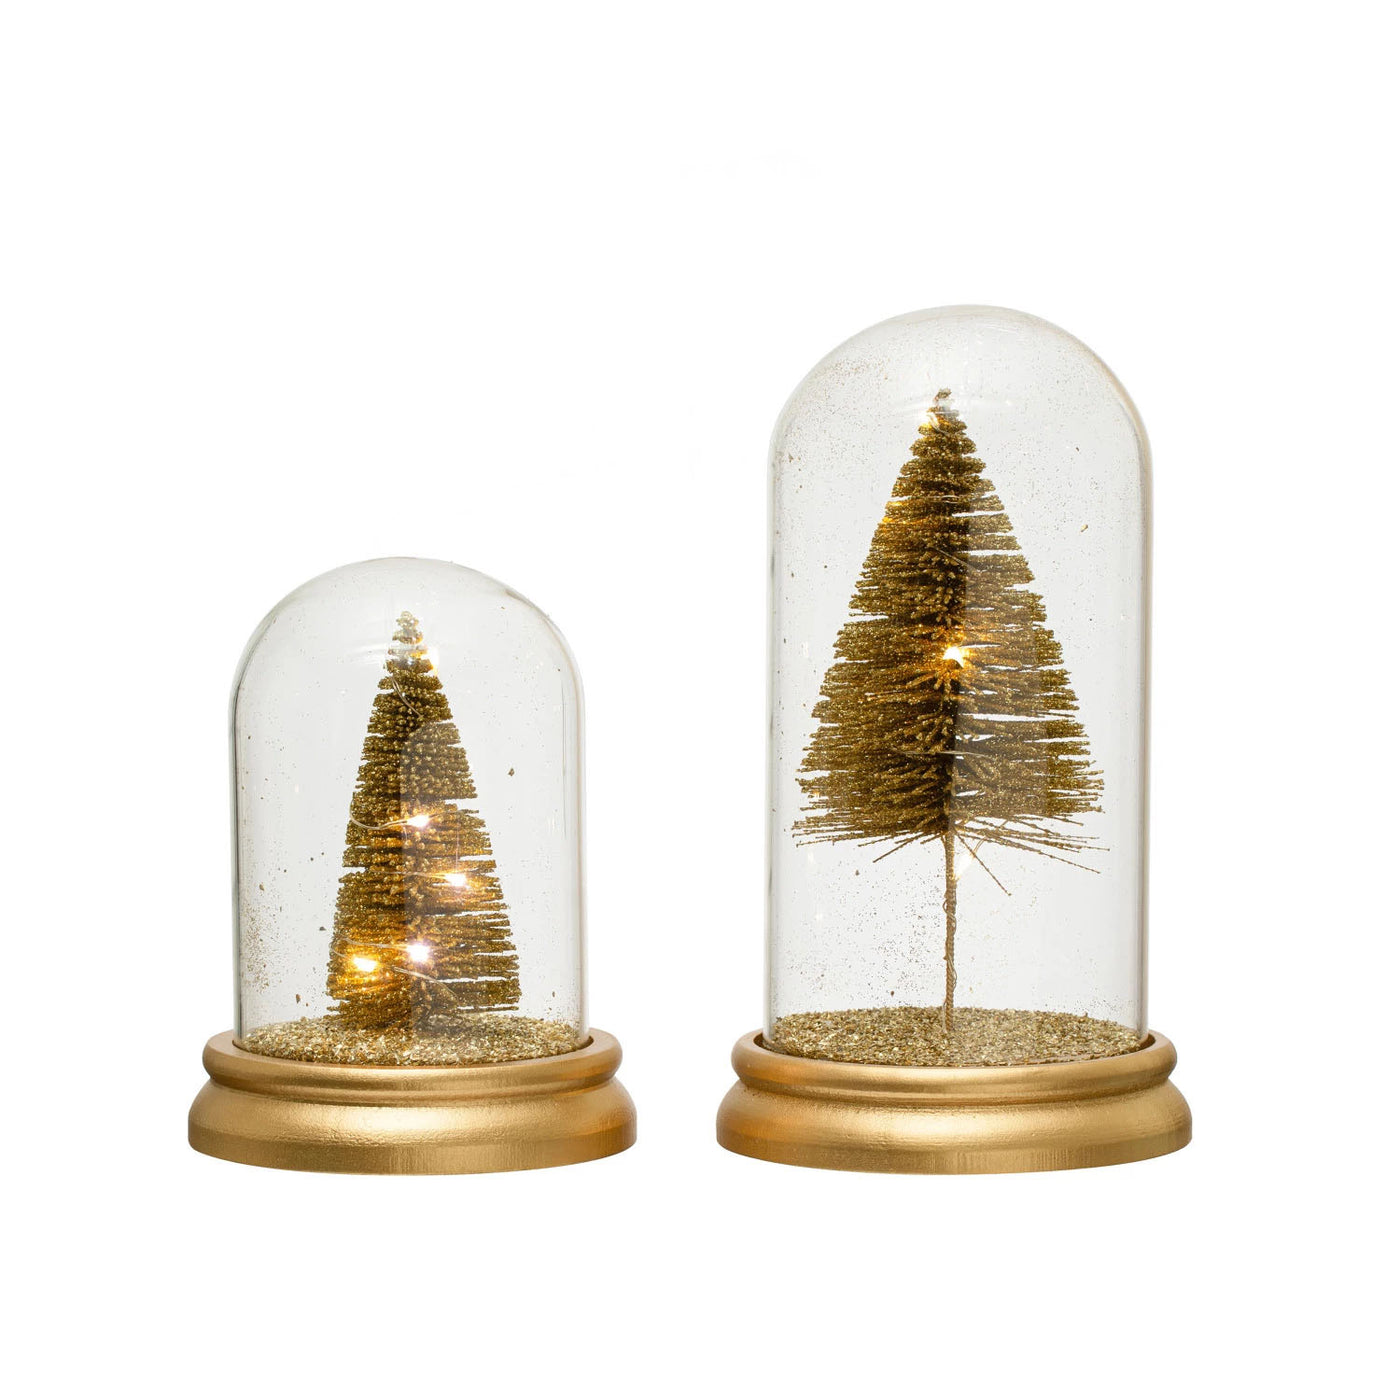 Golden Bottle Brush Tree in Cloche With LED Light - Choose Size